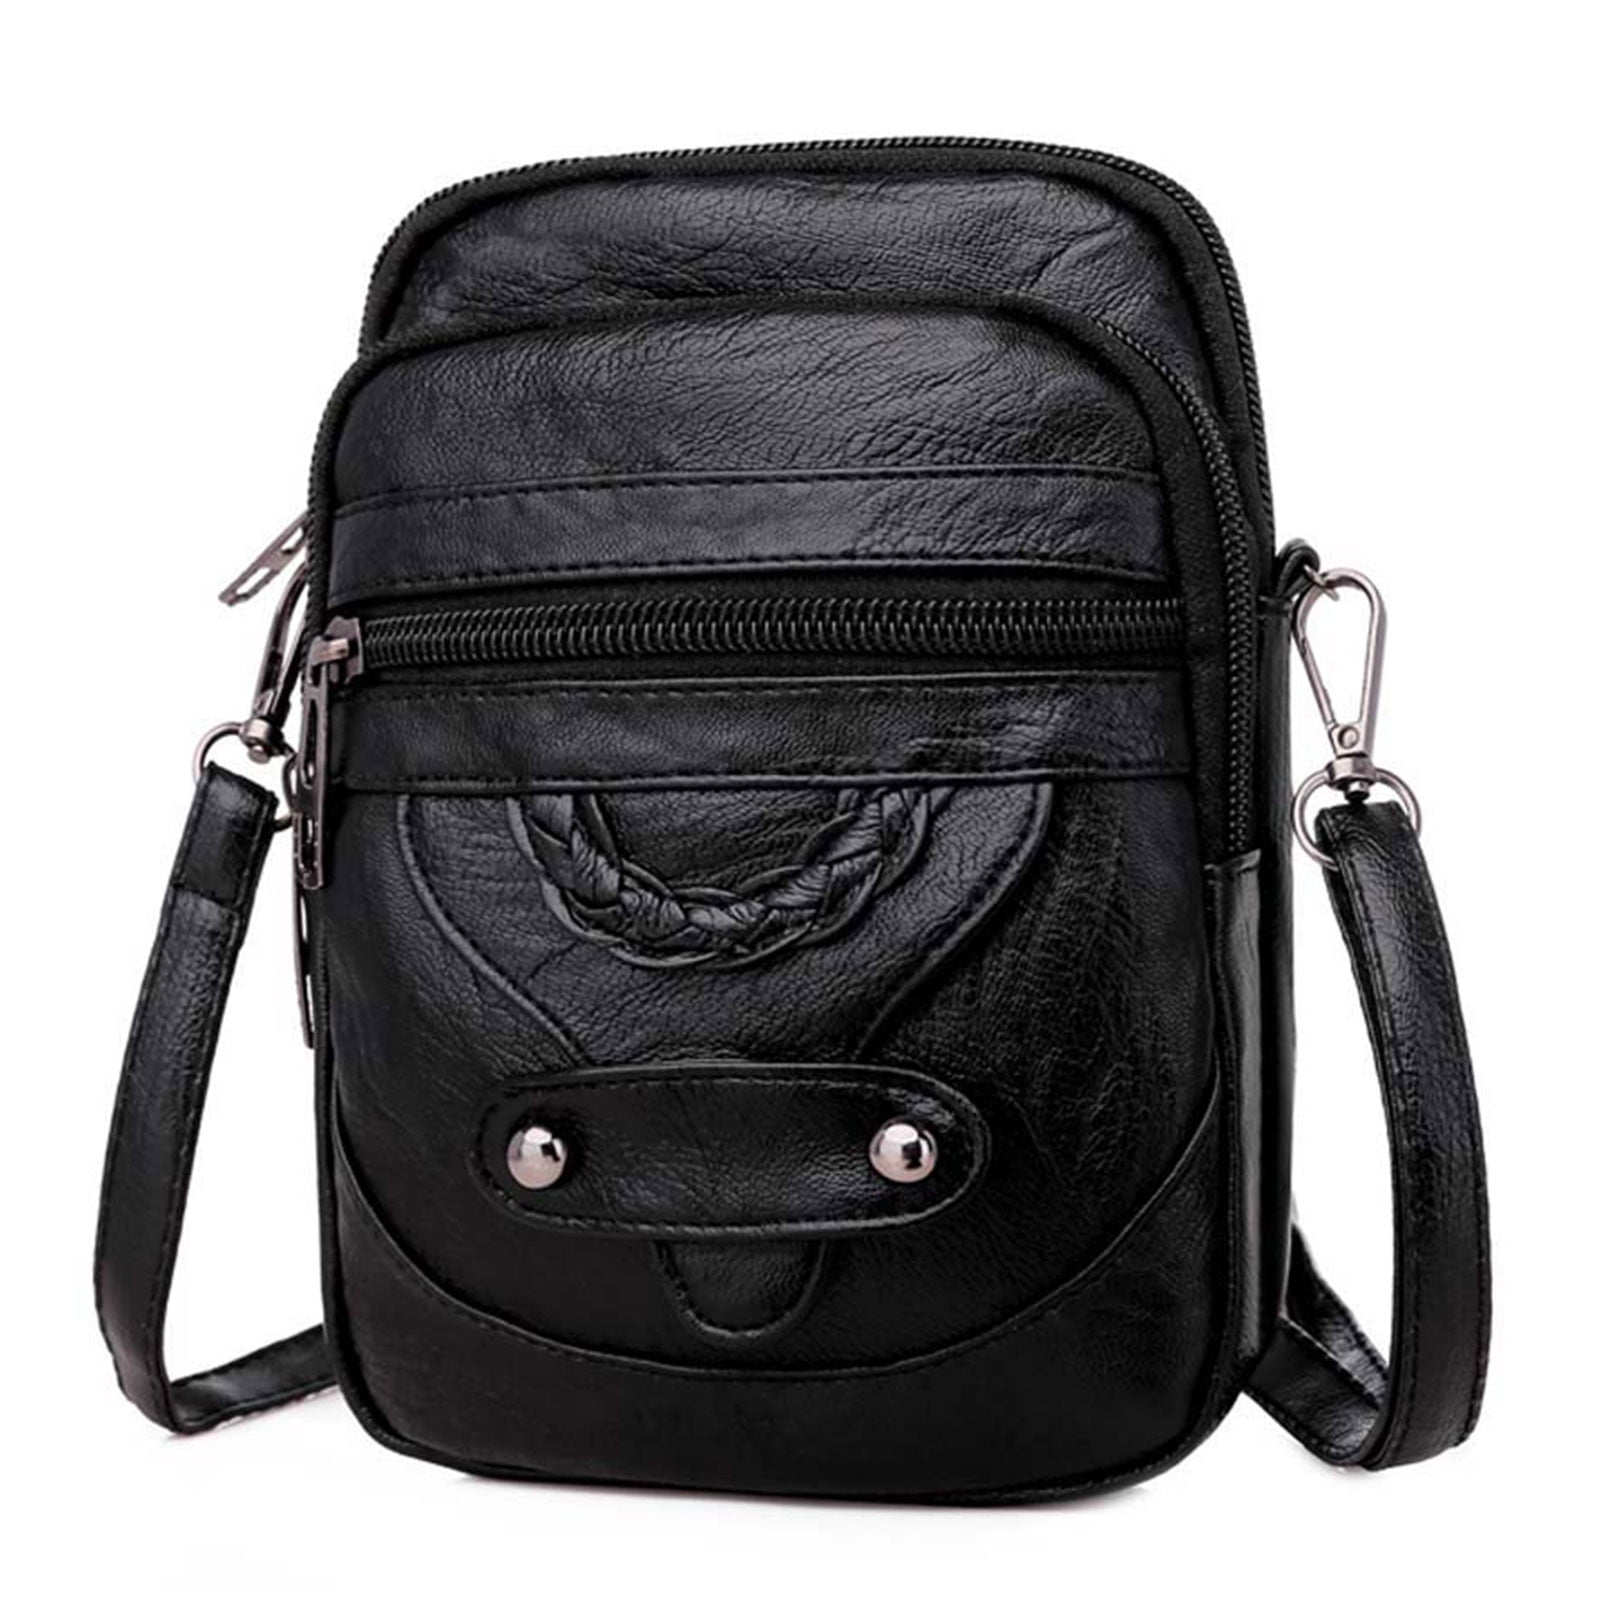 Red Clutch Bag Small Multi Pocket Cross Body Shoulder Bag Lightweight Slim Purse 